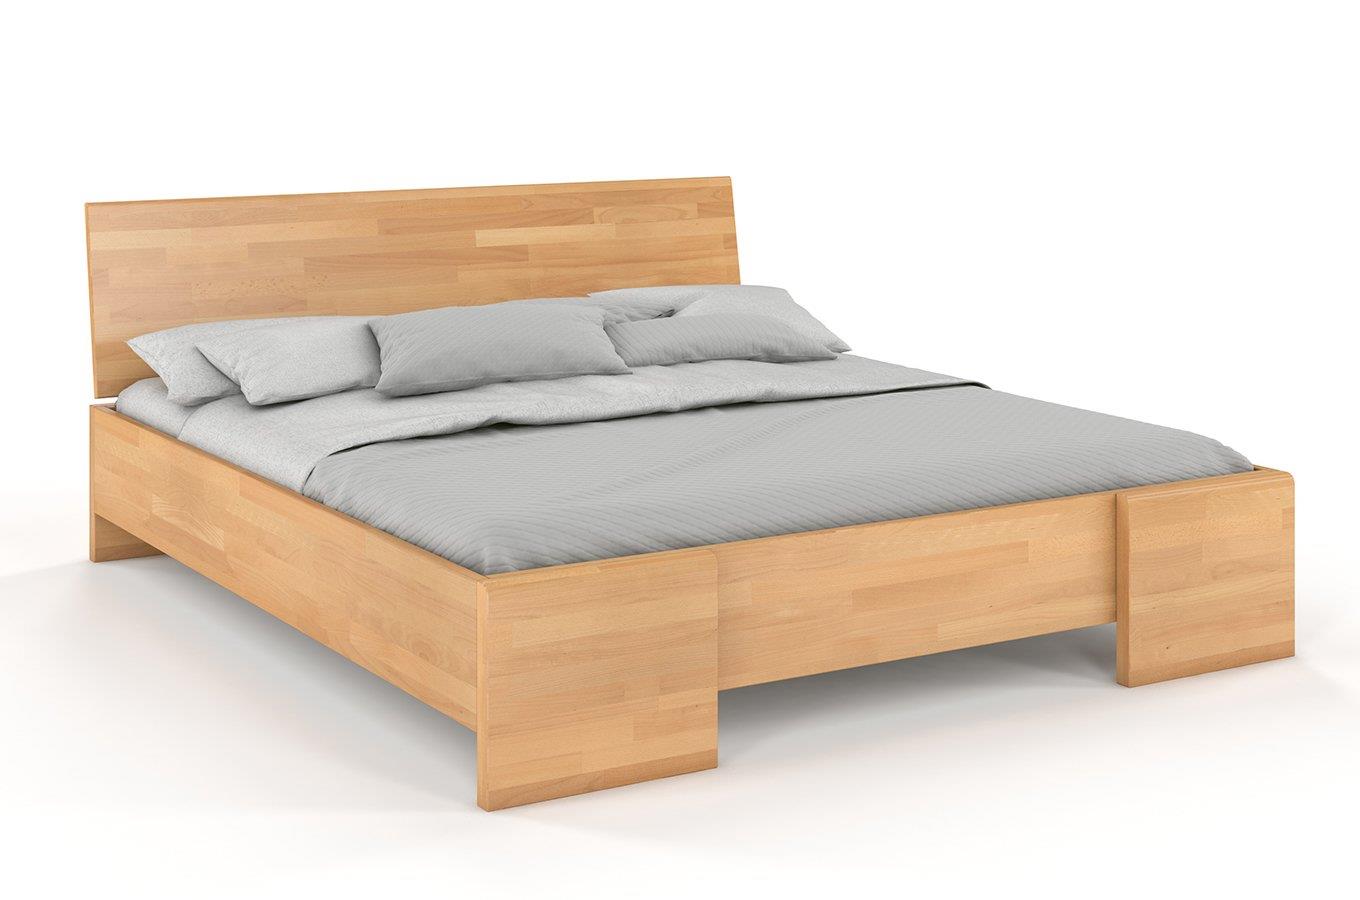 Łóżko drewniane bukowe Visby HESSLER High & LONG (długość + 20 cm) / 200x220 cm, kolor naturalny